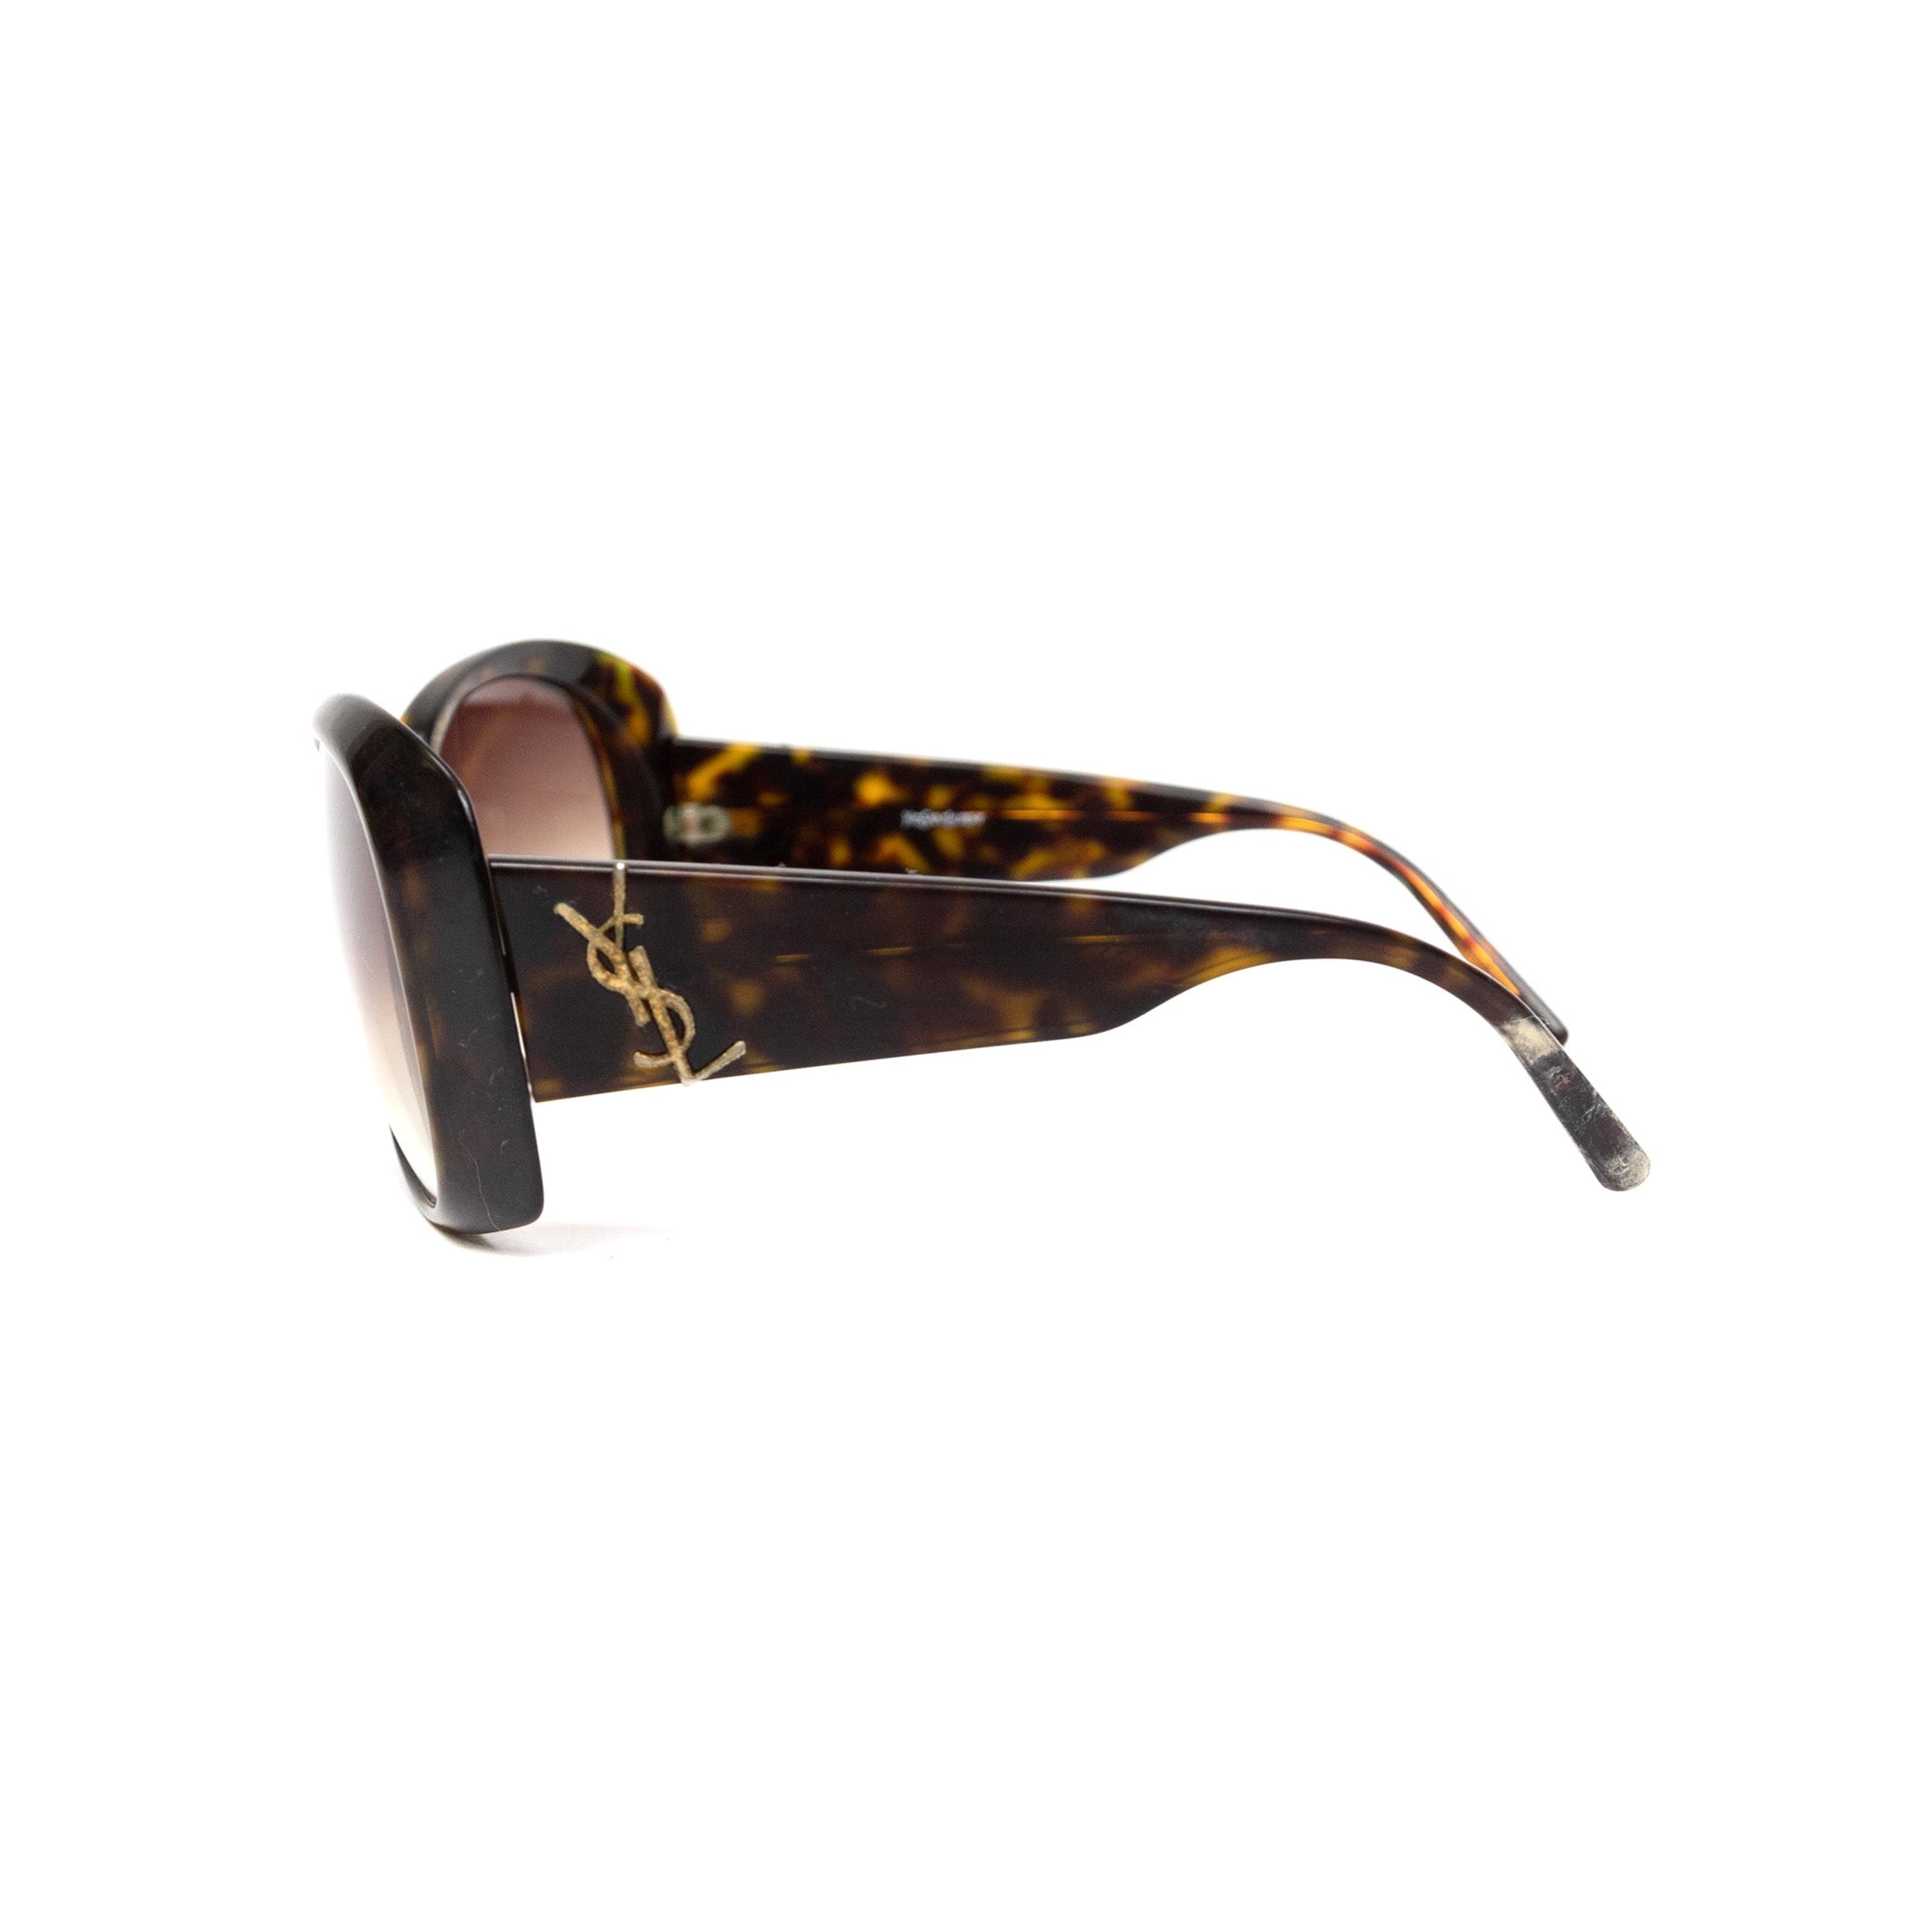 Alternate View 2 of Yves Saint Laurent Leopard Round Sunglasses